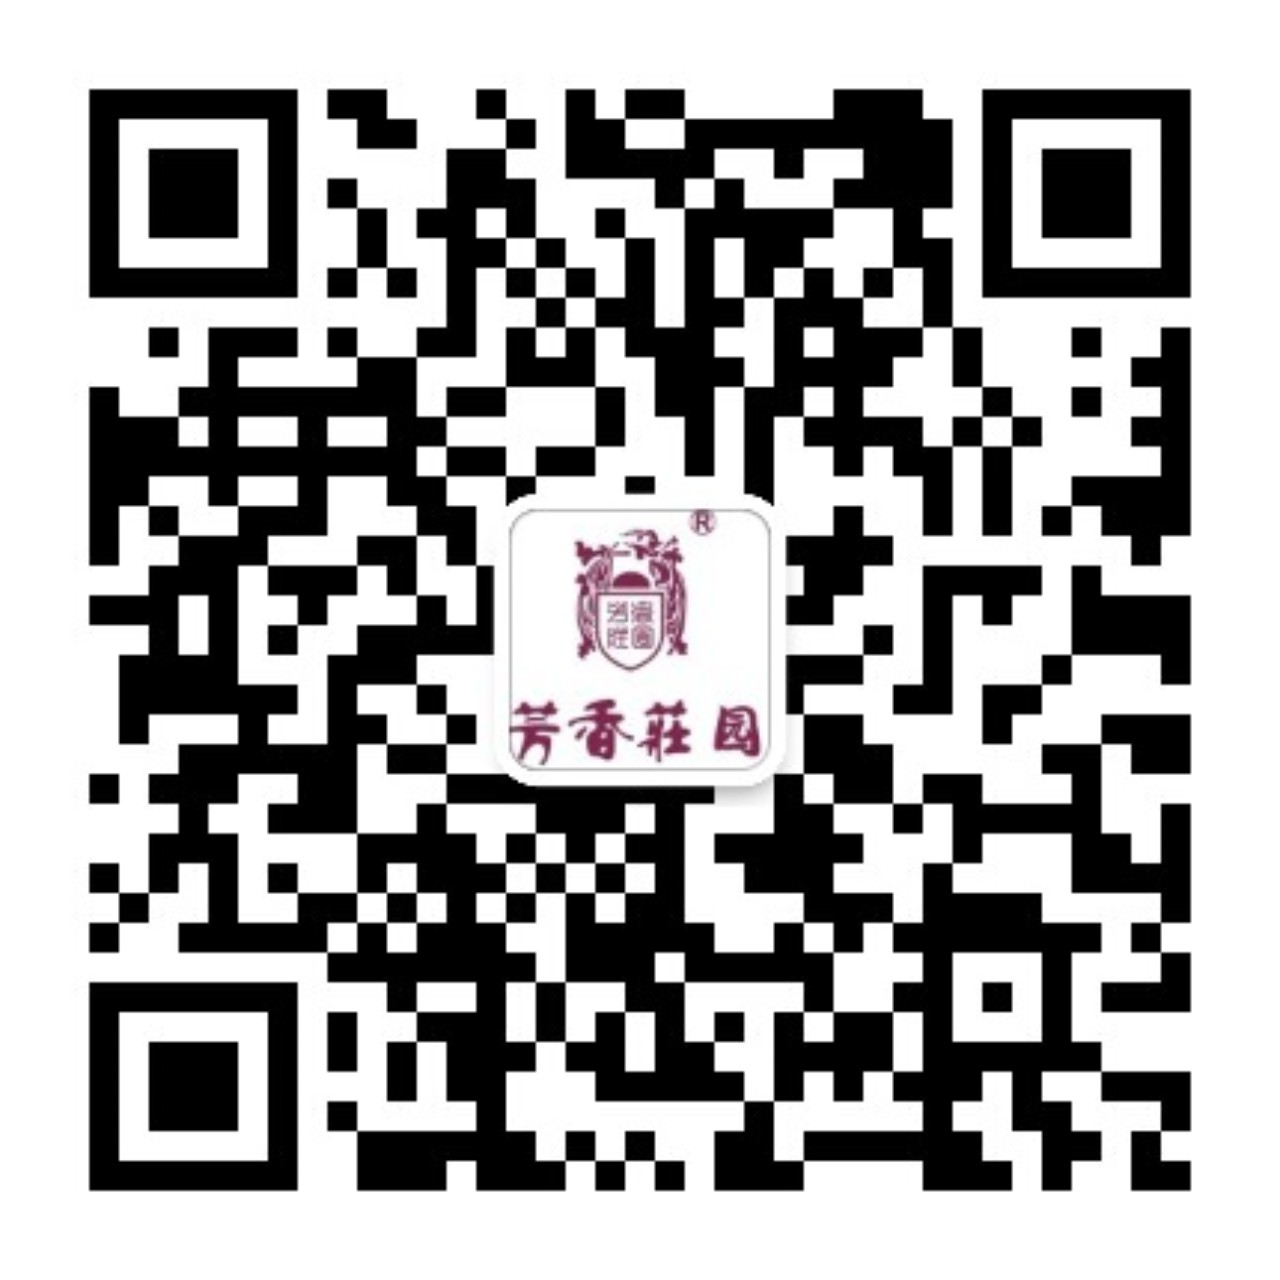 bifa必发·(中国)唯一官方网站